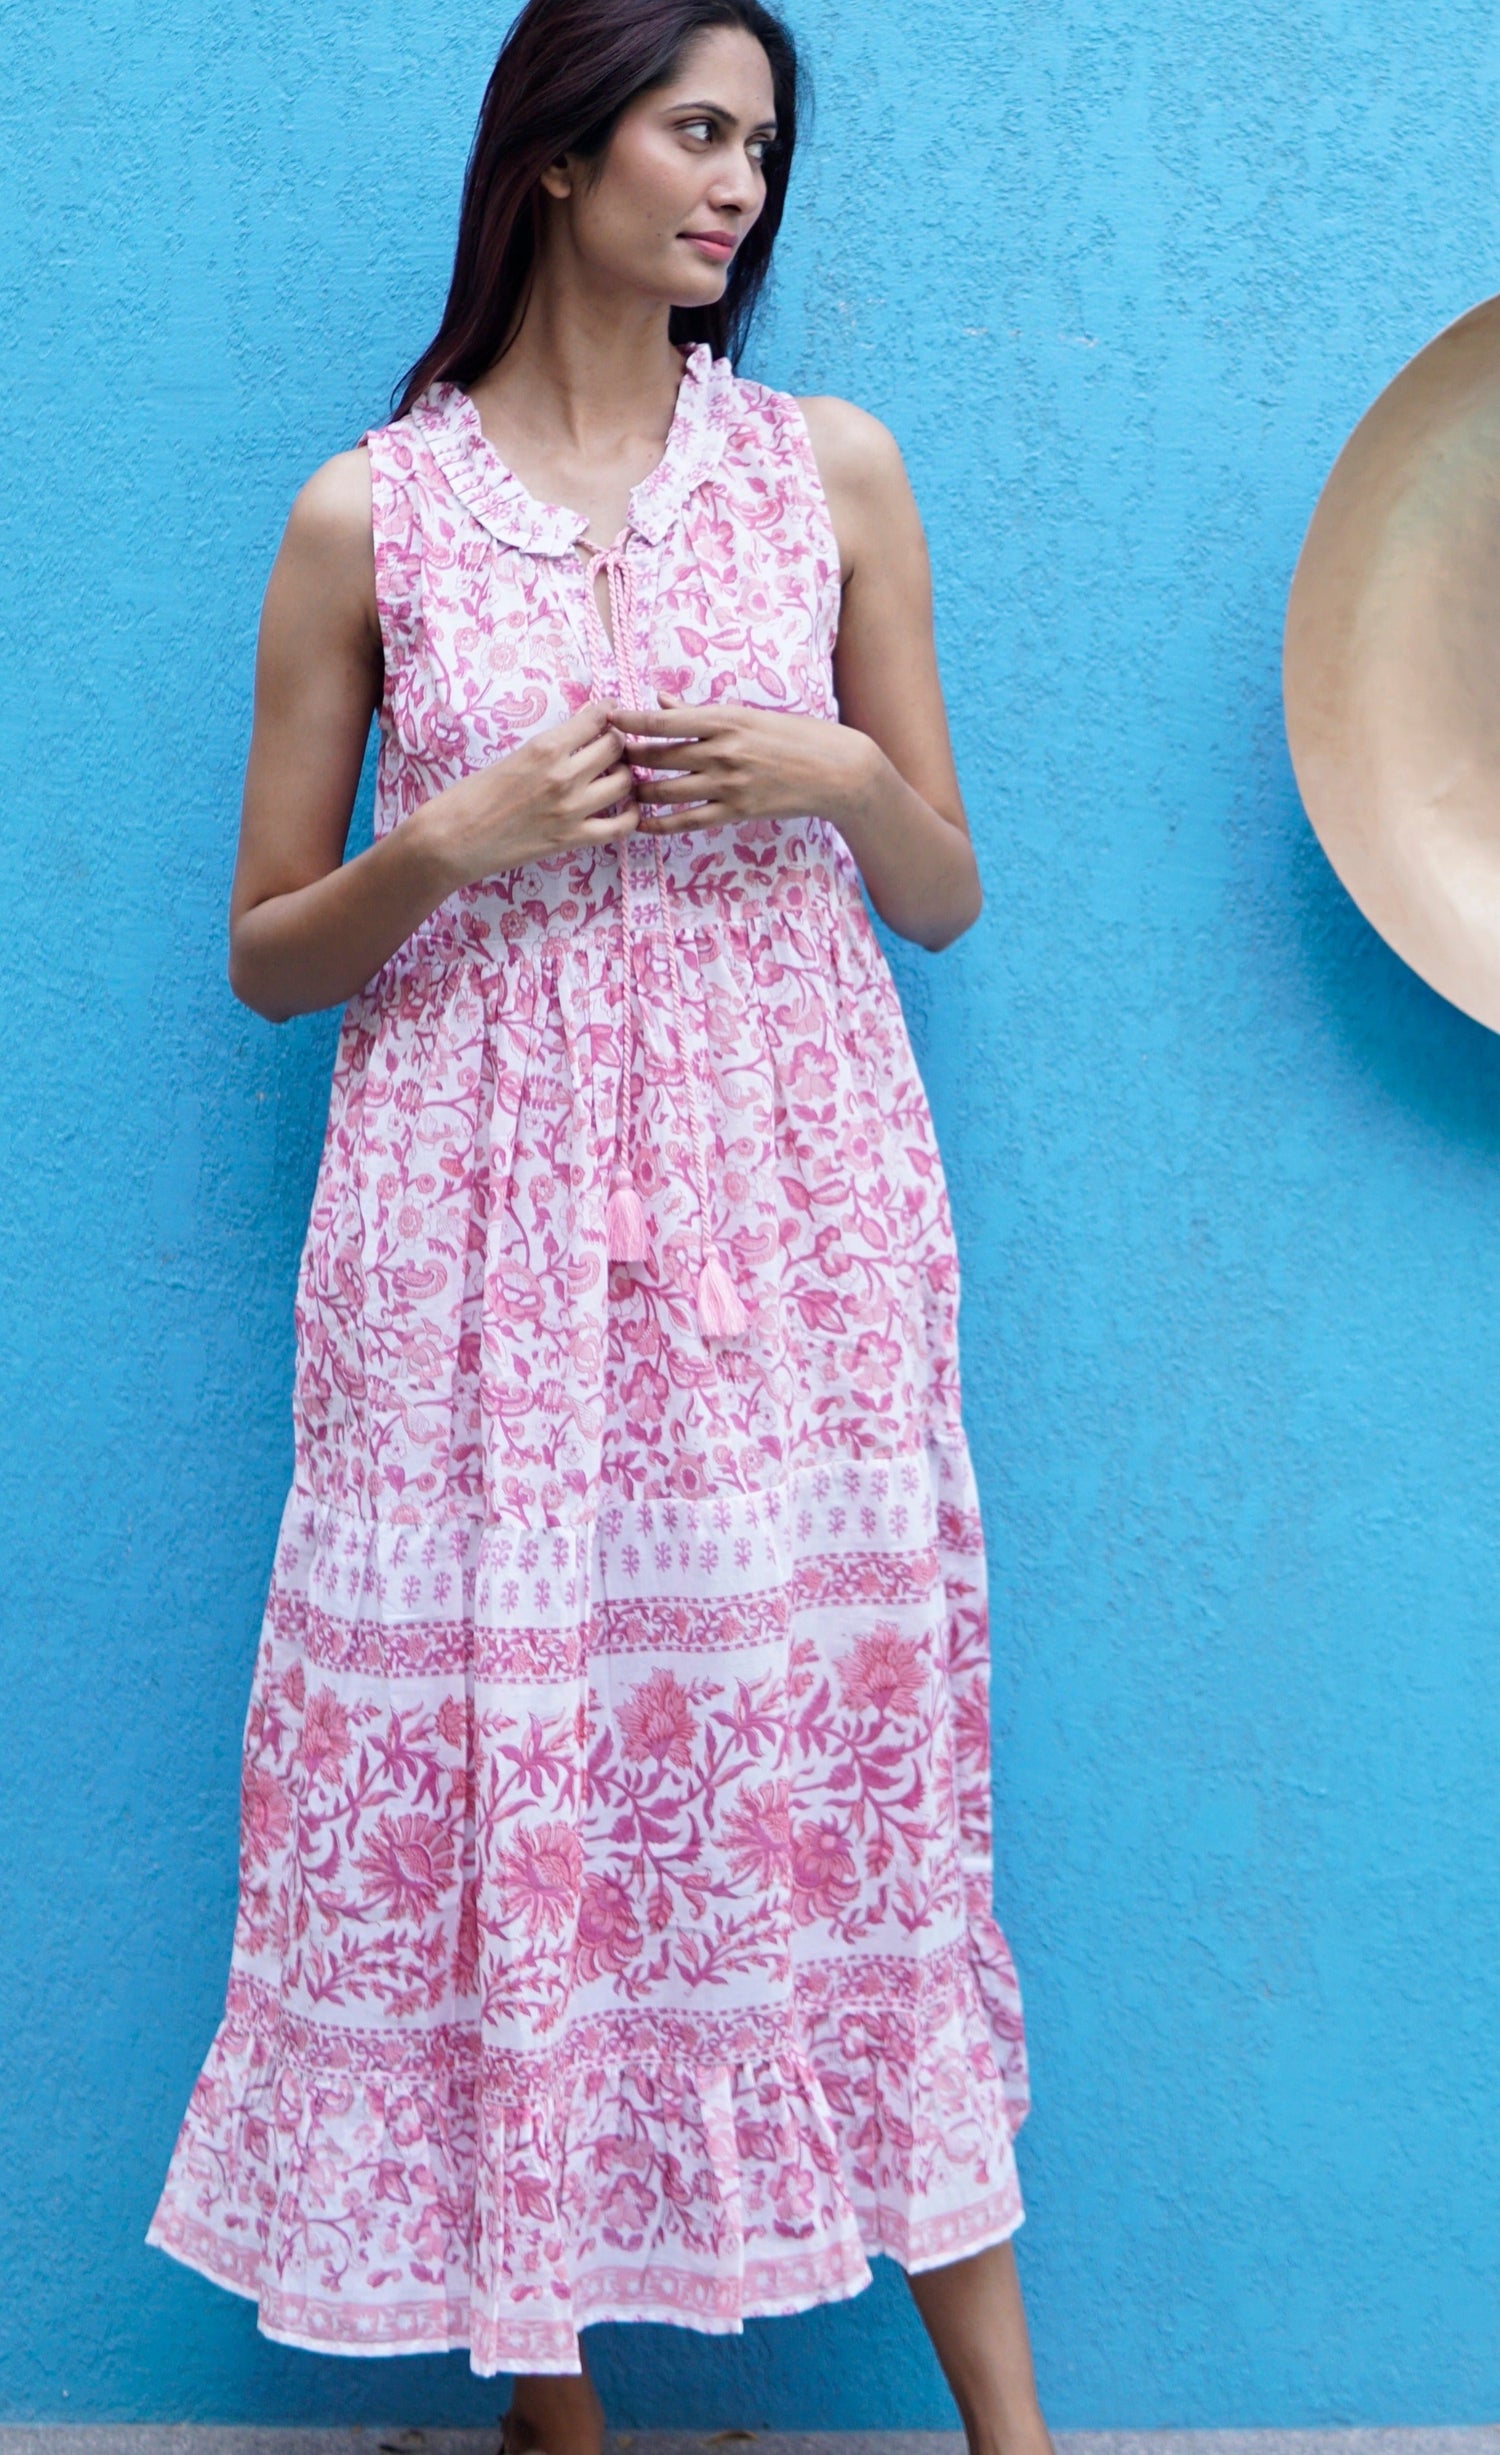 Beach dress, summer maxi dress, boho printed maxi dress, pink and white cotton print.